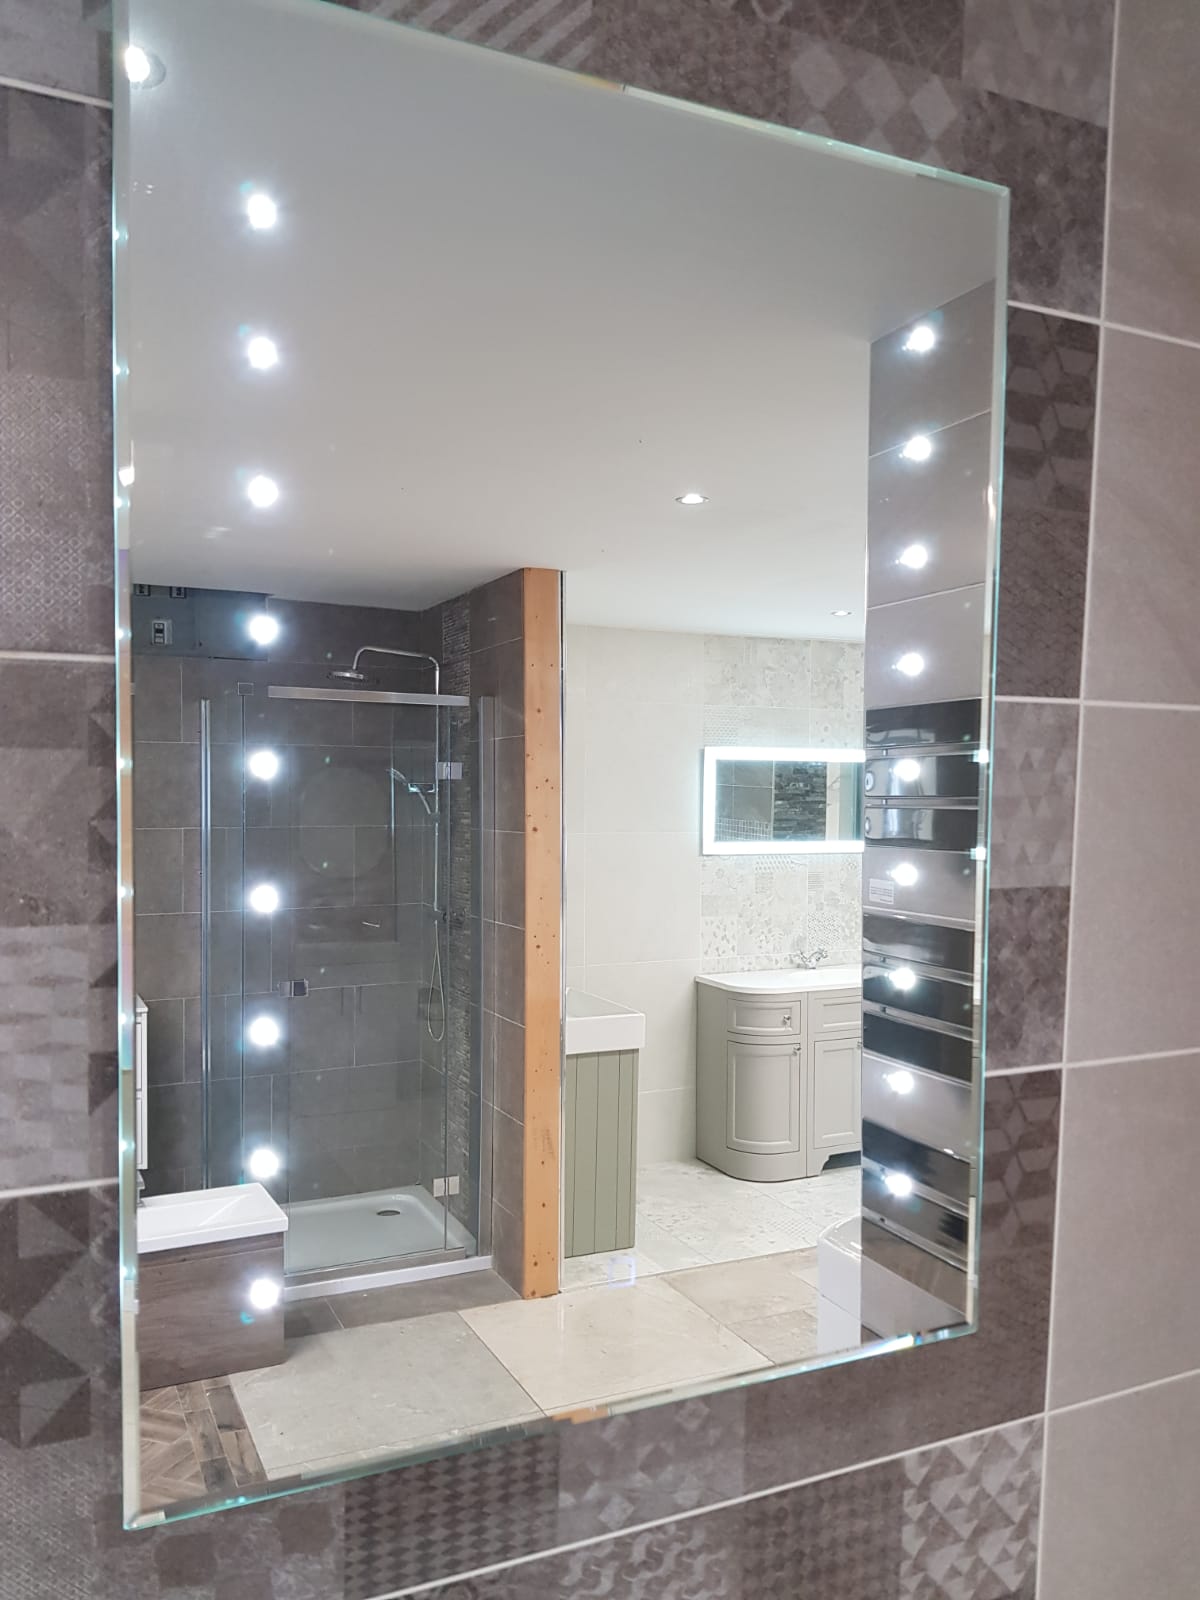 LED 07 bathroom mirror with Led Lighting sensor switch and heat pad